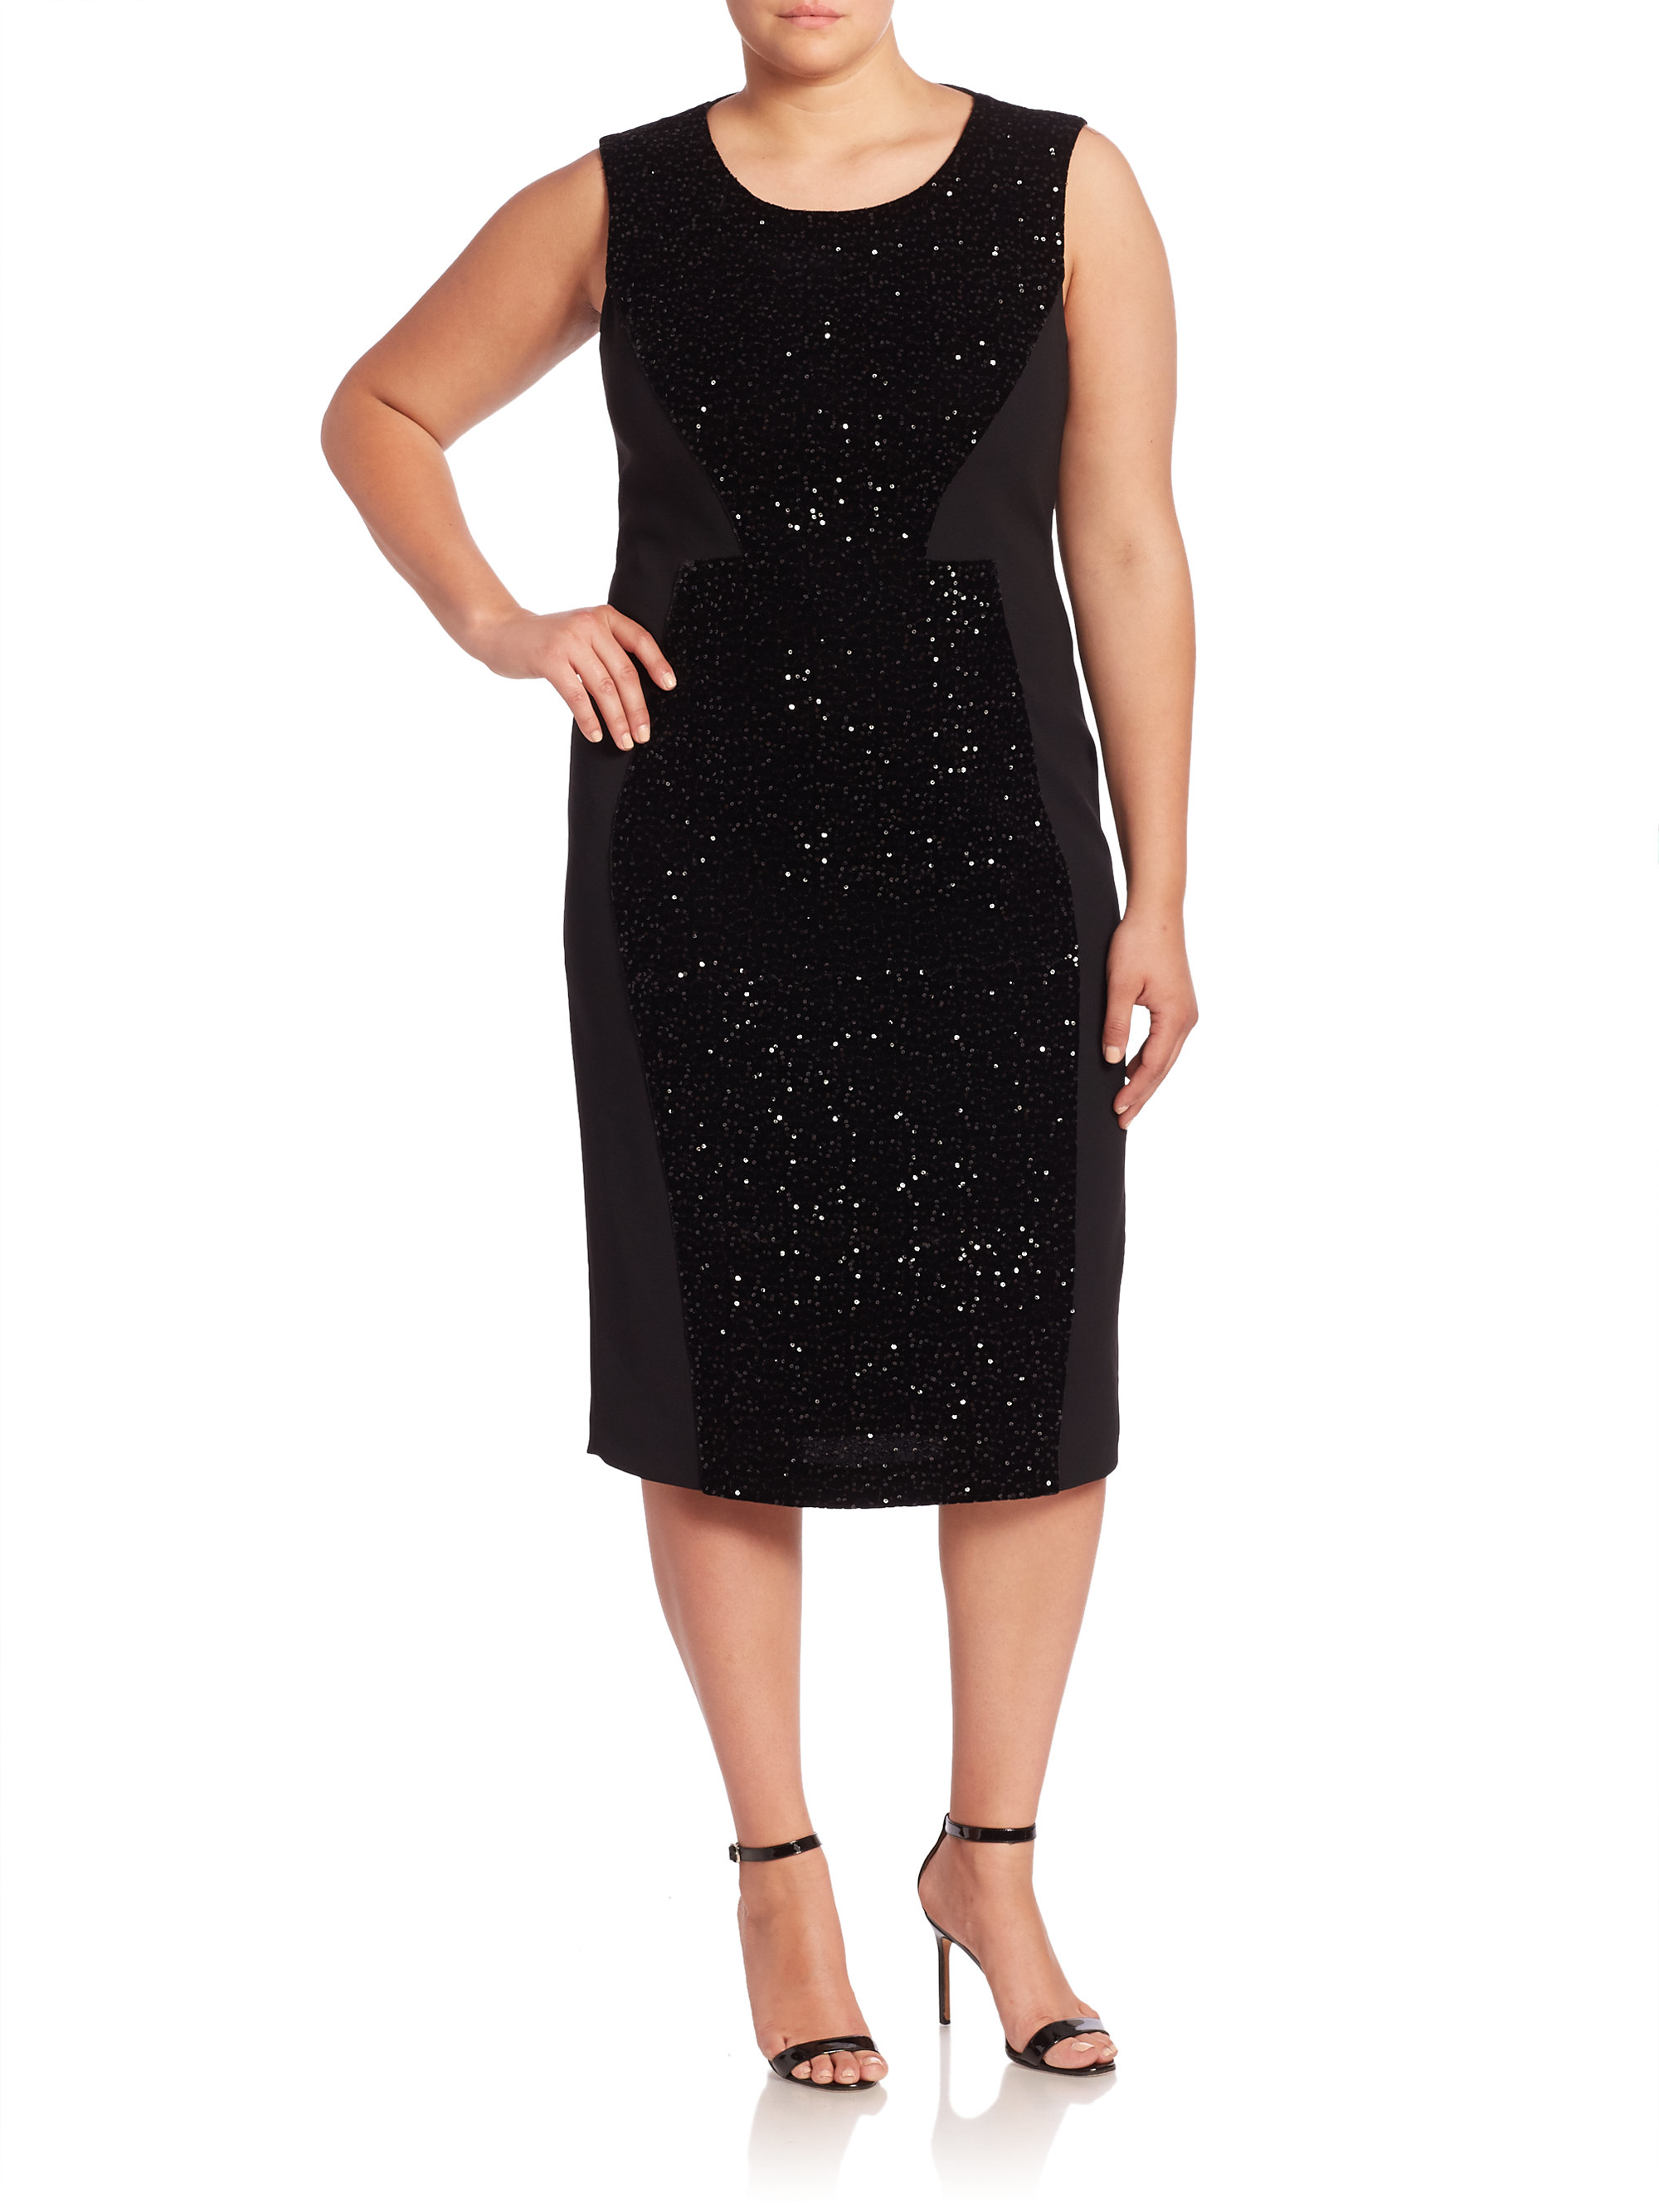 Lyst - Marina rinaldi Elegante Sleeveless Sequin Dress in Black